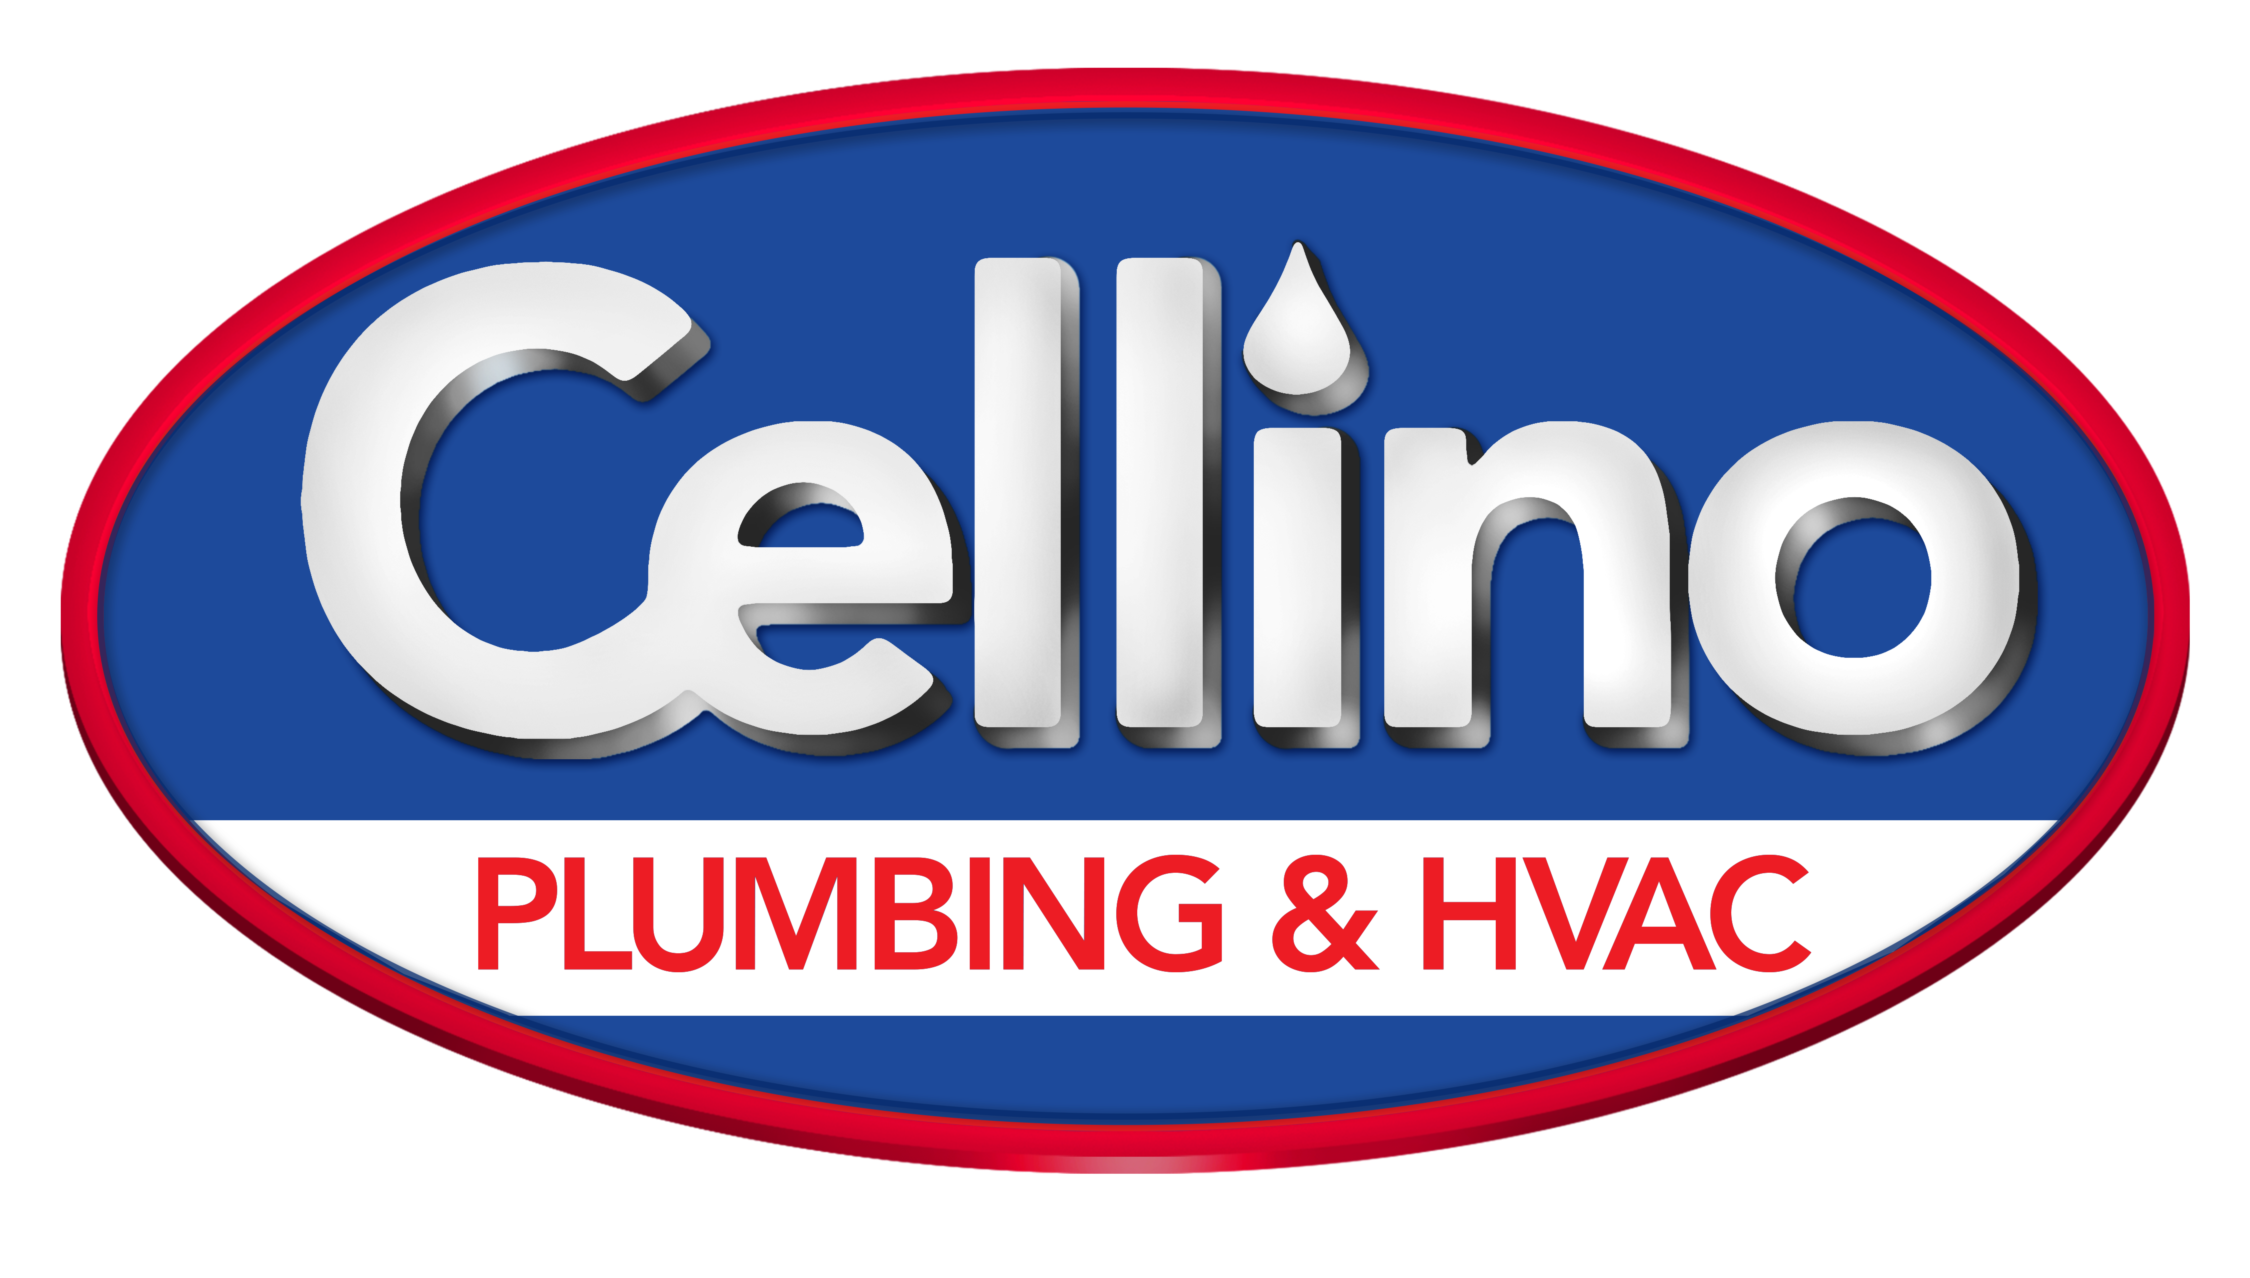 Cellino Plumbing & HVAC Company Logo